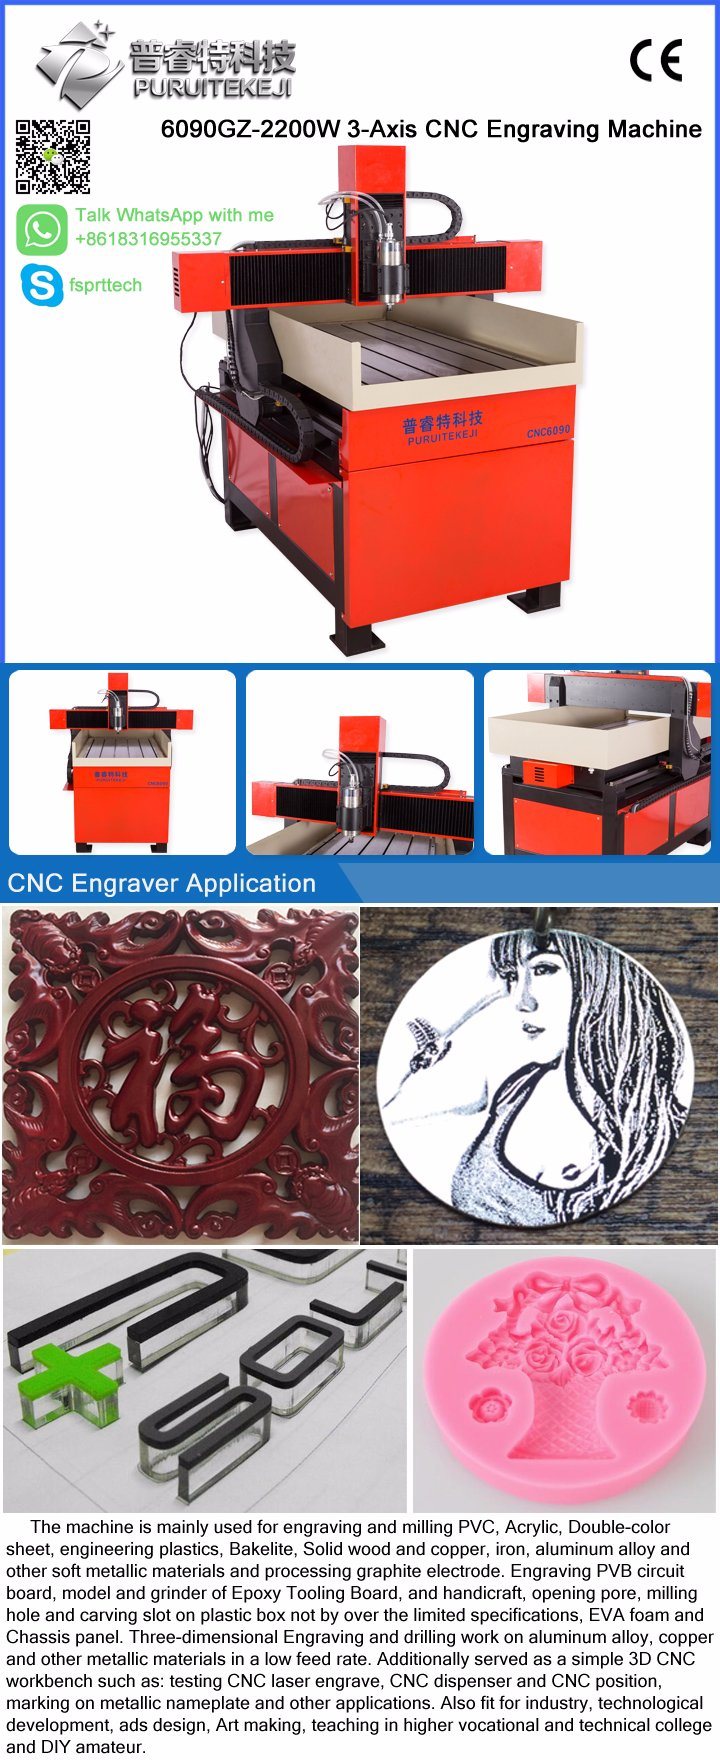 Mini CNC Router Machine 3D CNC Engraving Machine